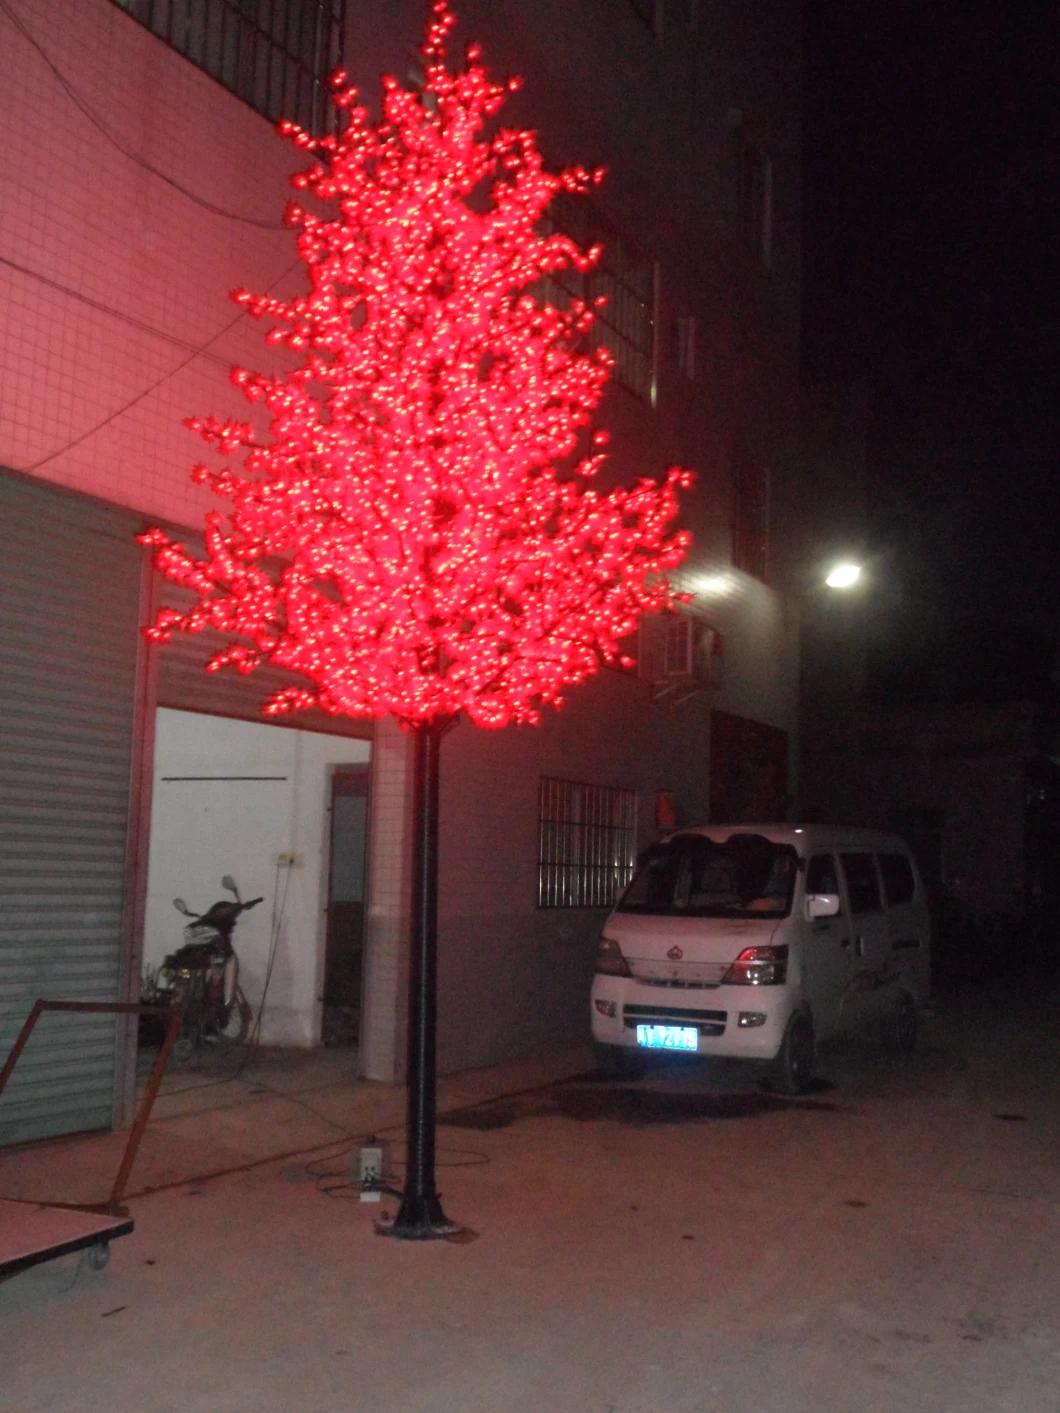 Yaye CE & RoHS Approval LED Orange Tree Light, LED Christmas Tree Light with 2 Years Warranty